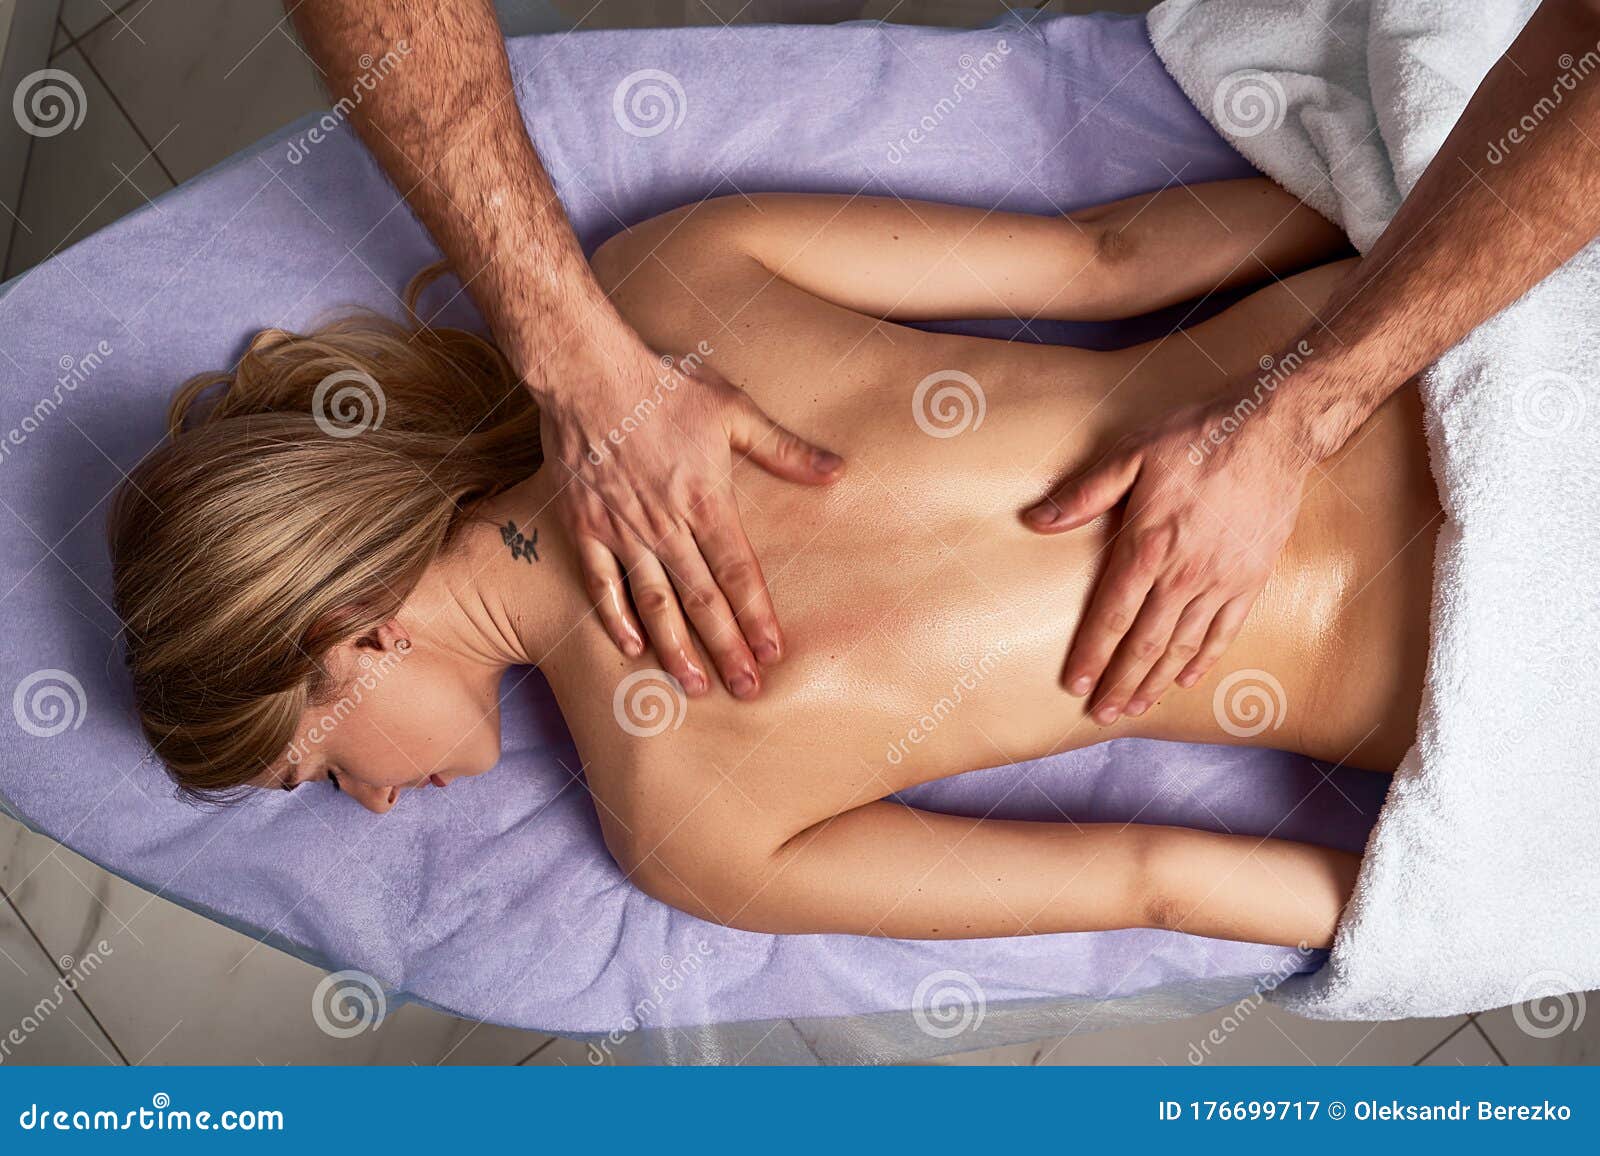 andrew rispoli add photo female naked massage